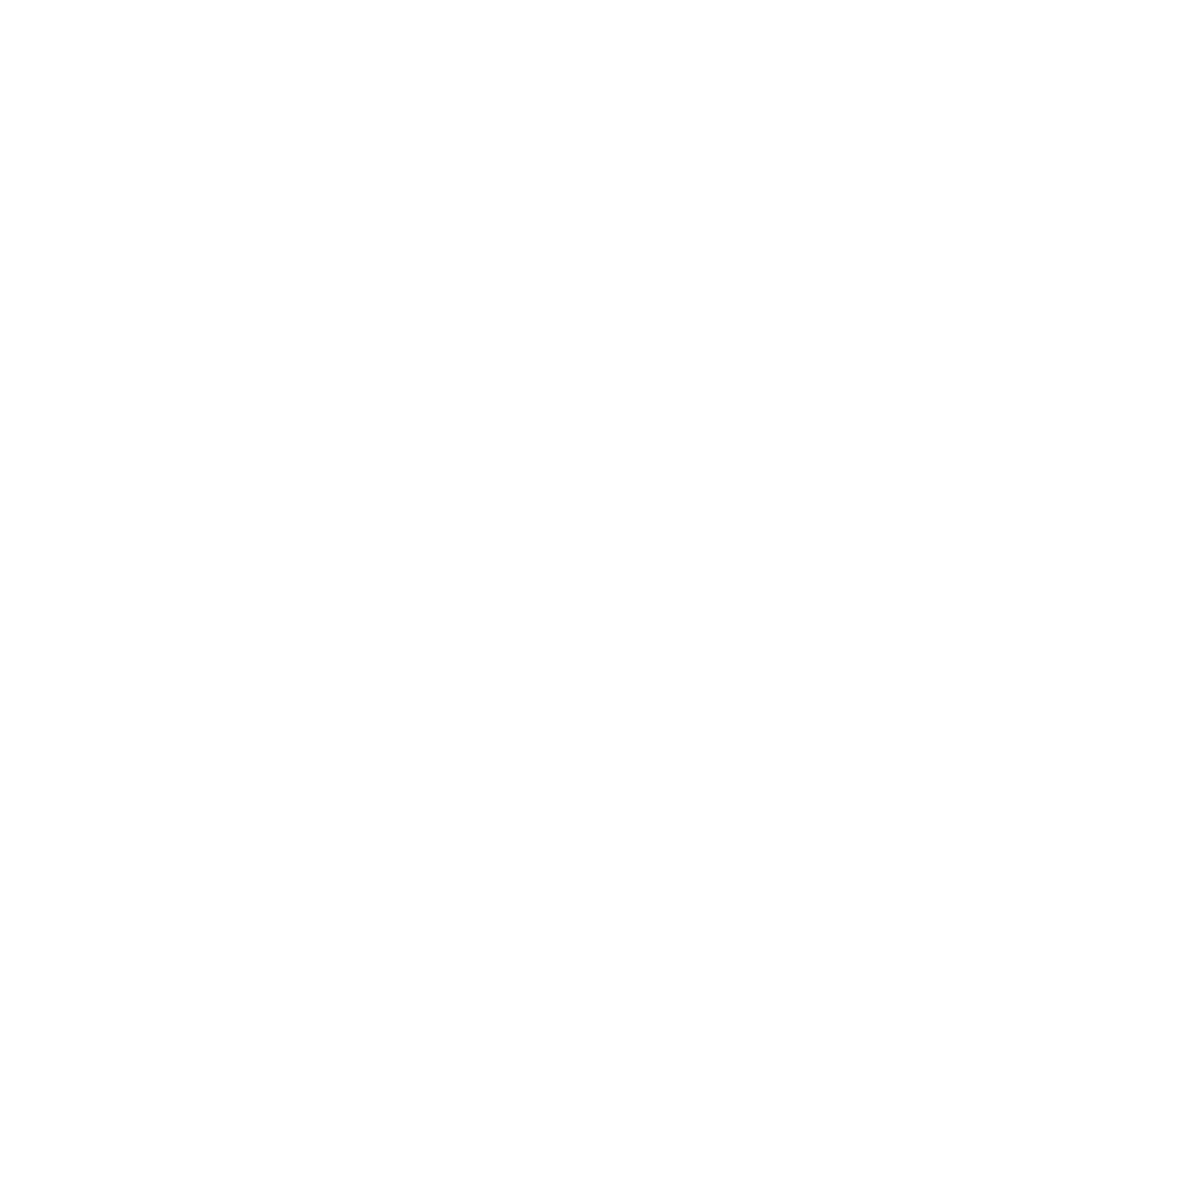 ExecutiveMogul-White